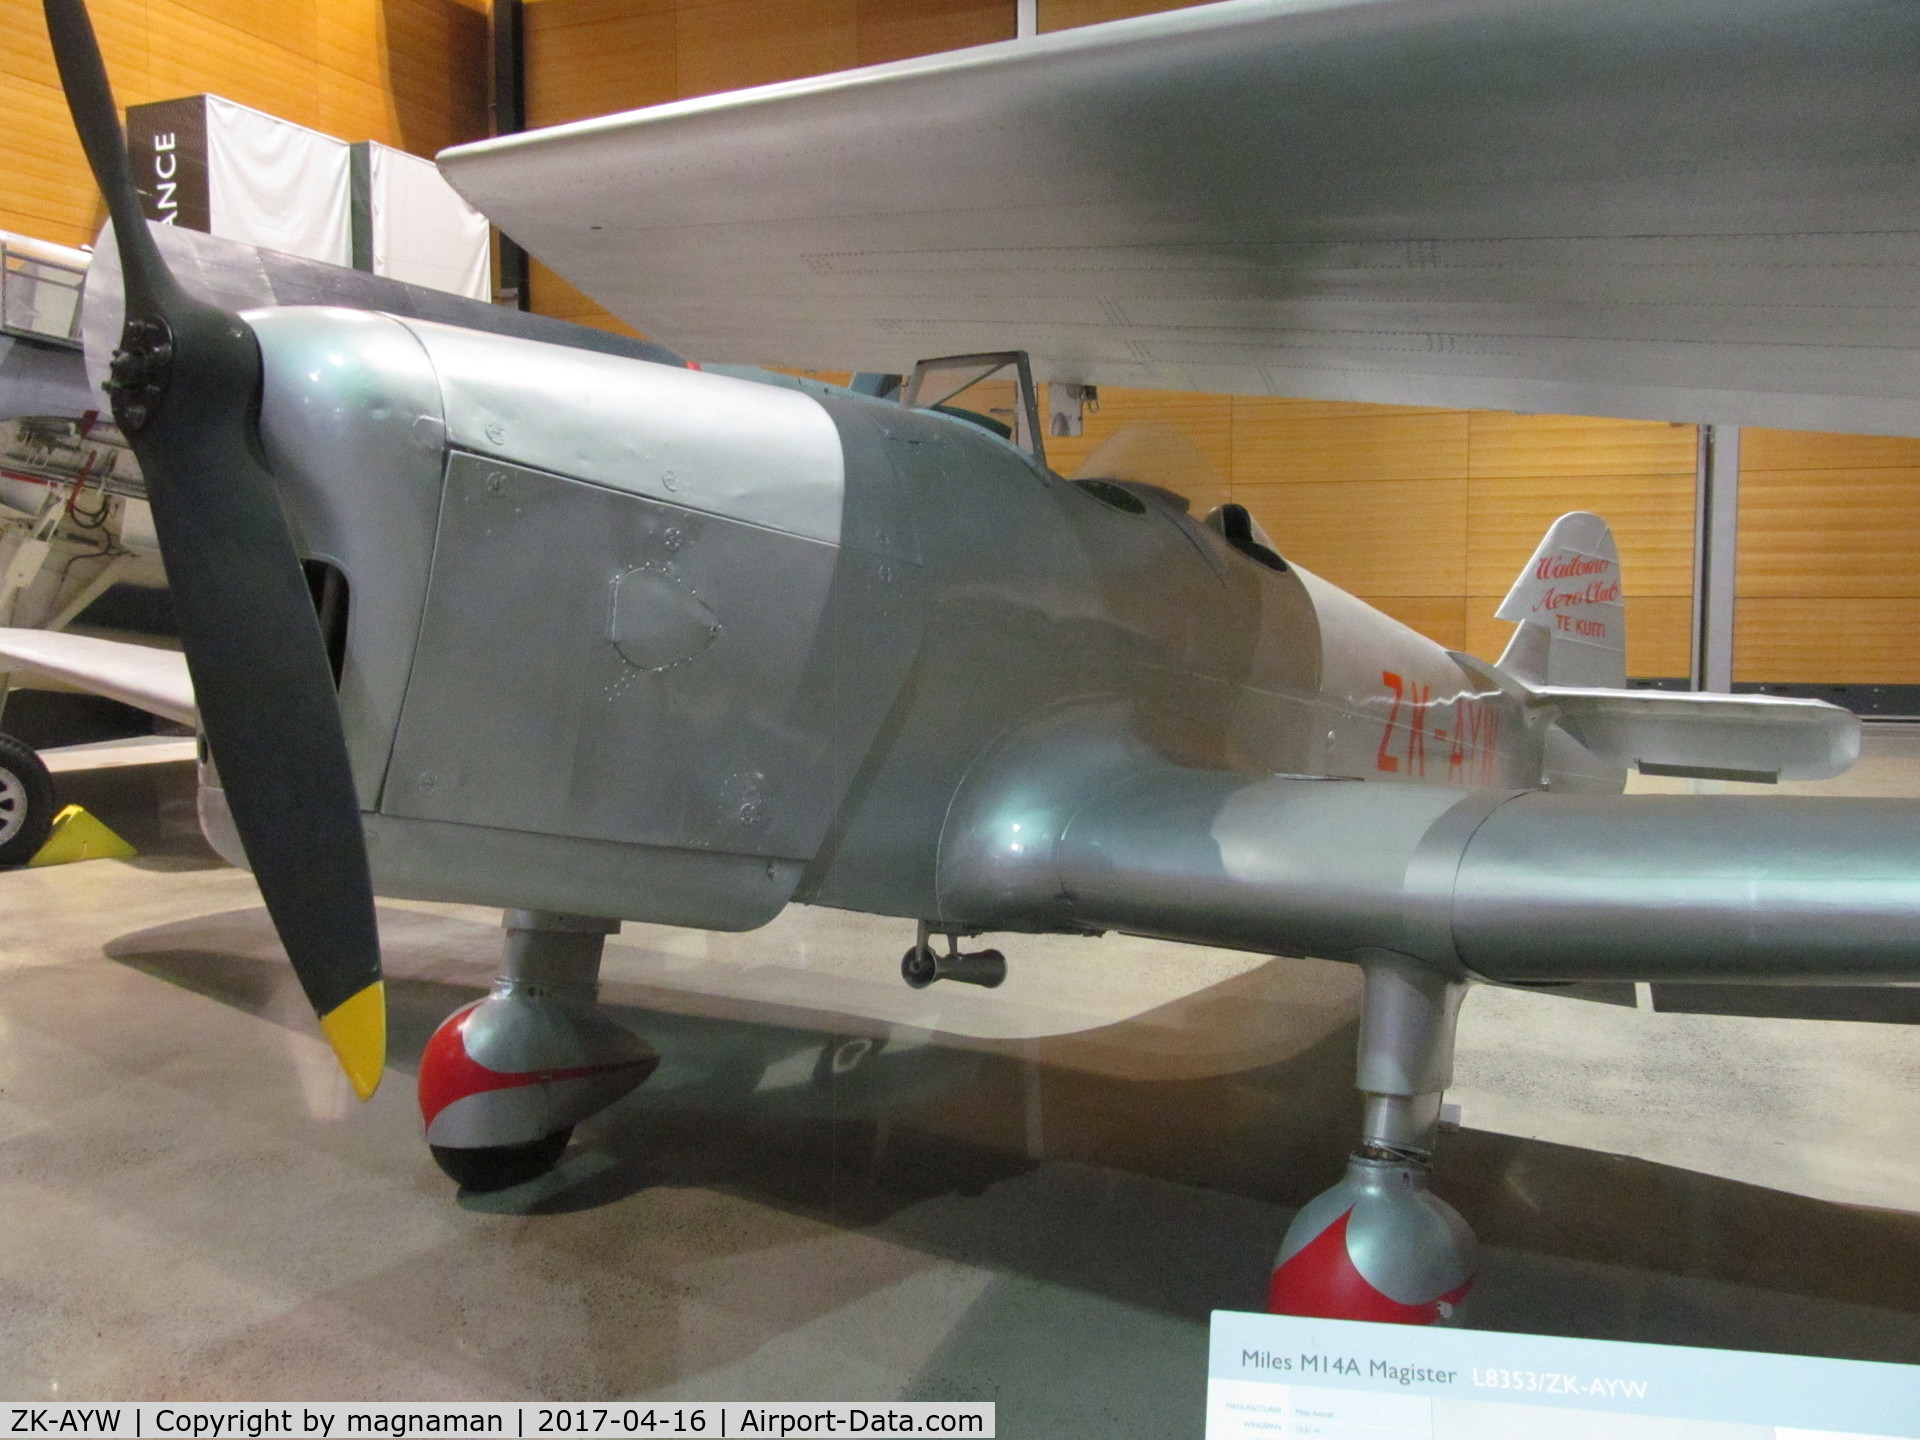 ZK-AYW, 1938 Miles M14A Hawk Trainer 3 C/N 779, new exhibit at MOTAT